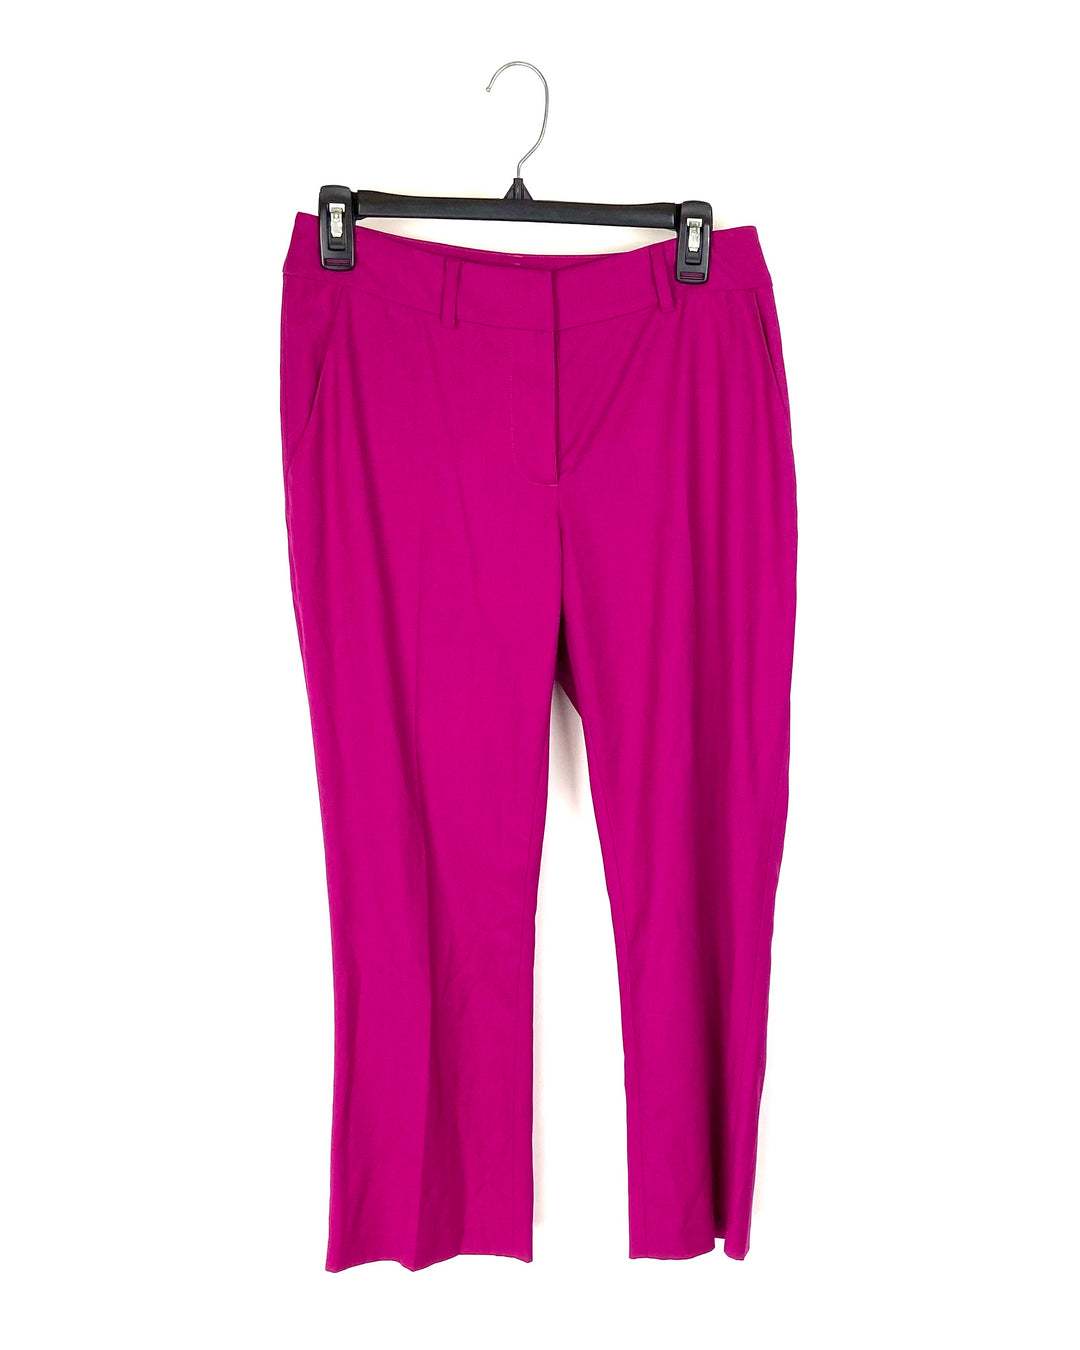 Dark Pink/Purple Pants - Small